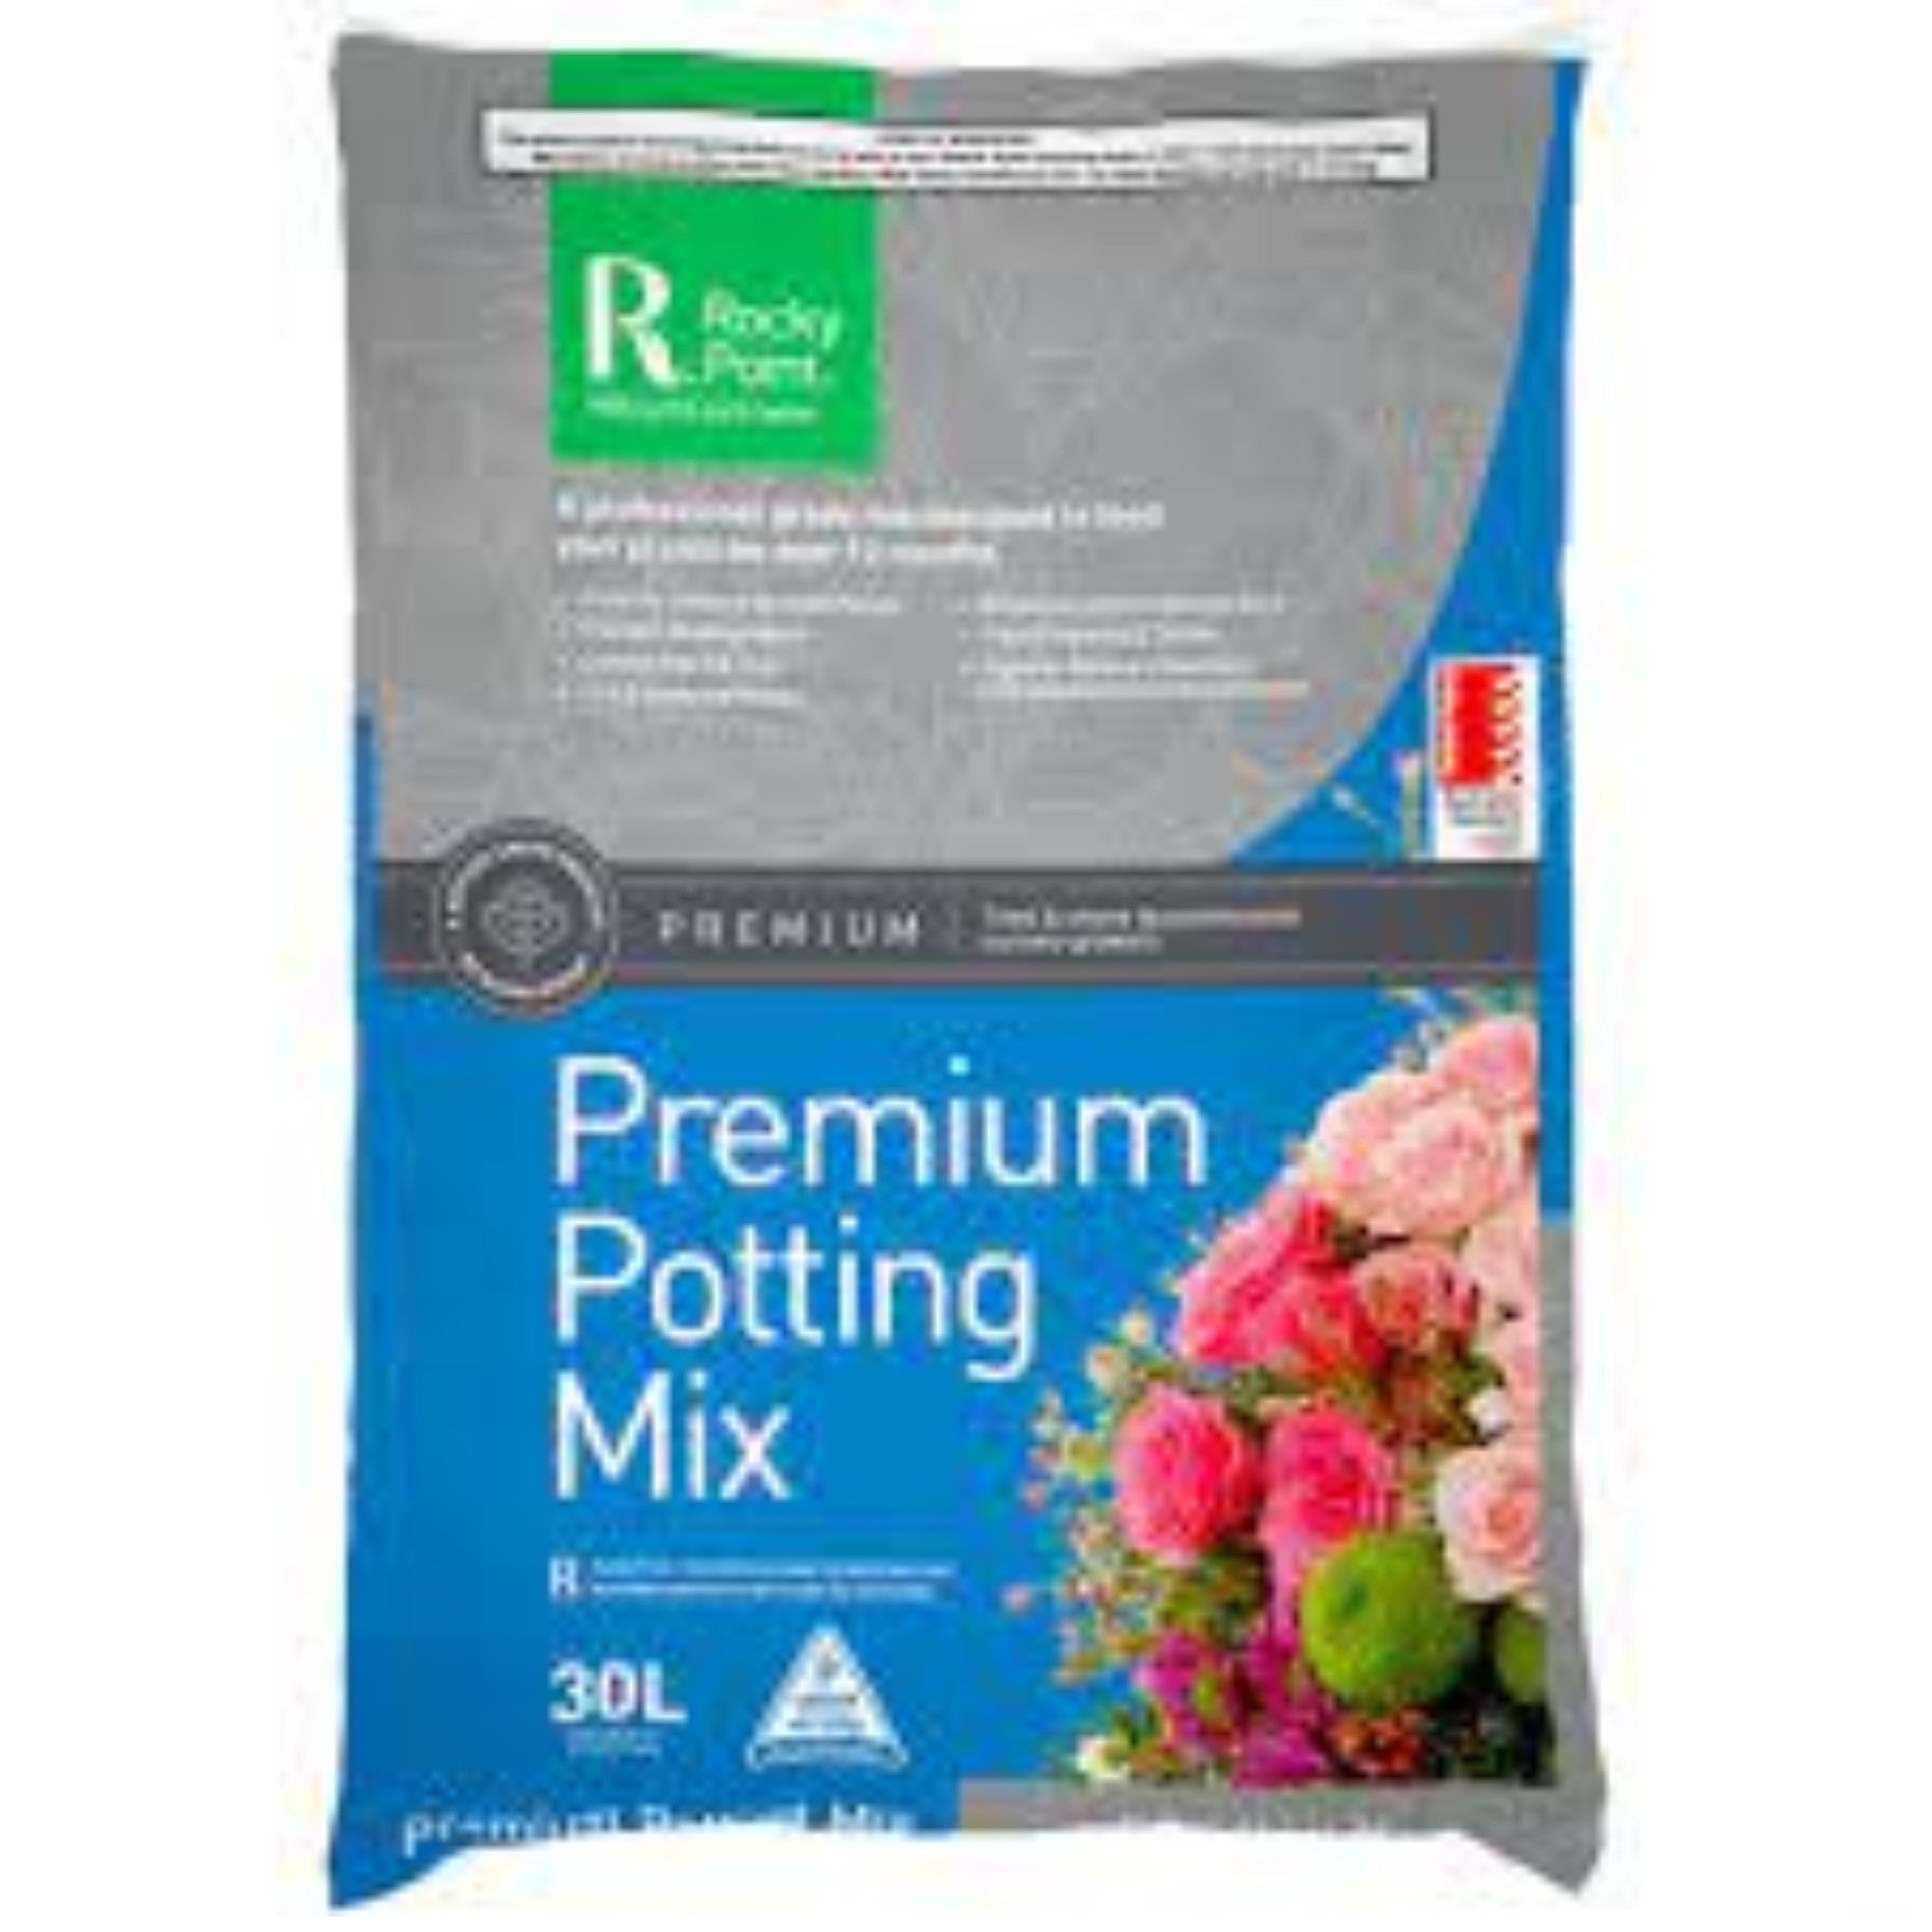 Premium Potting Mix 30l